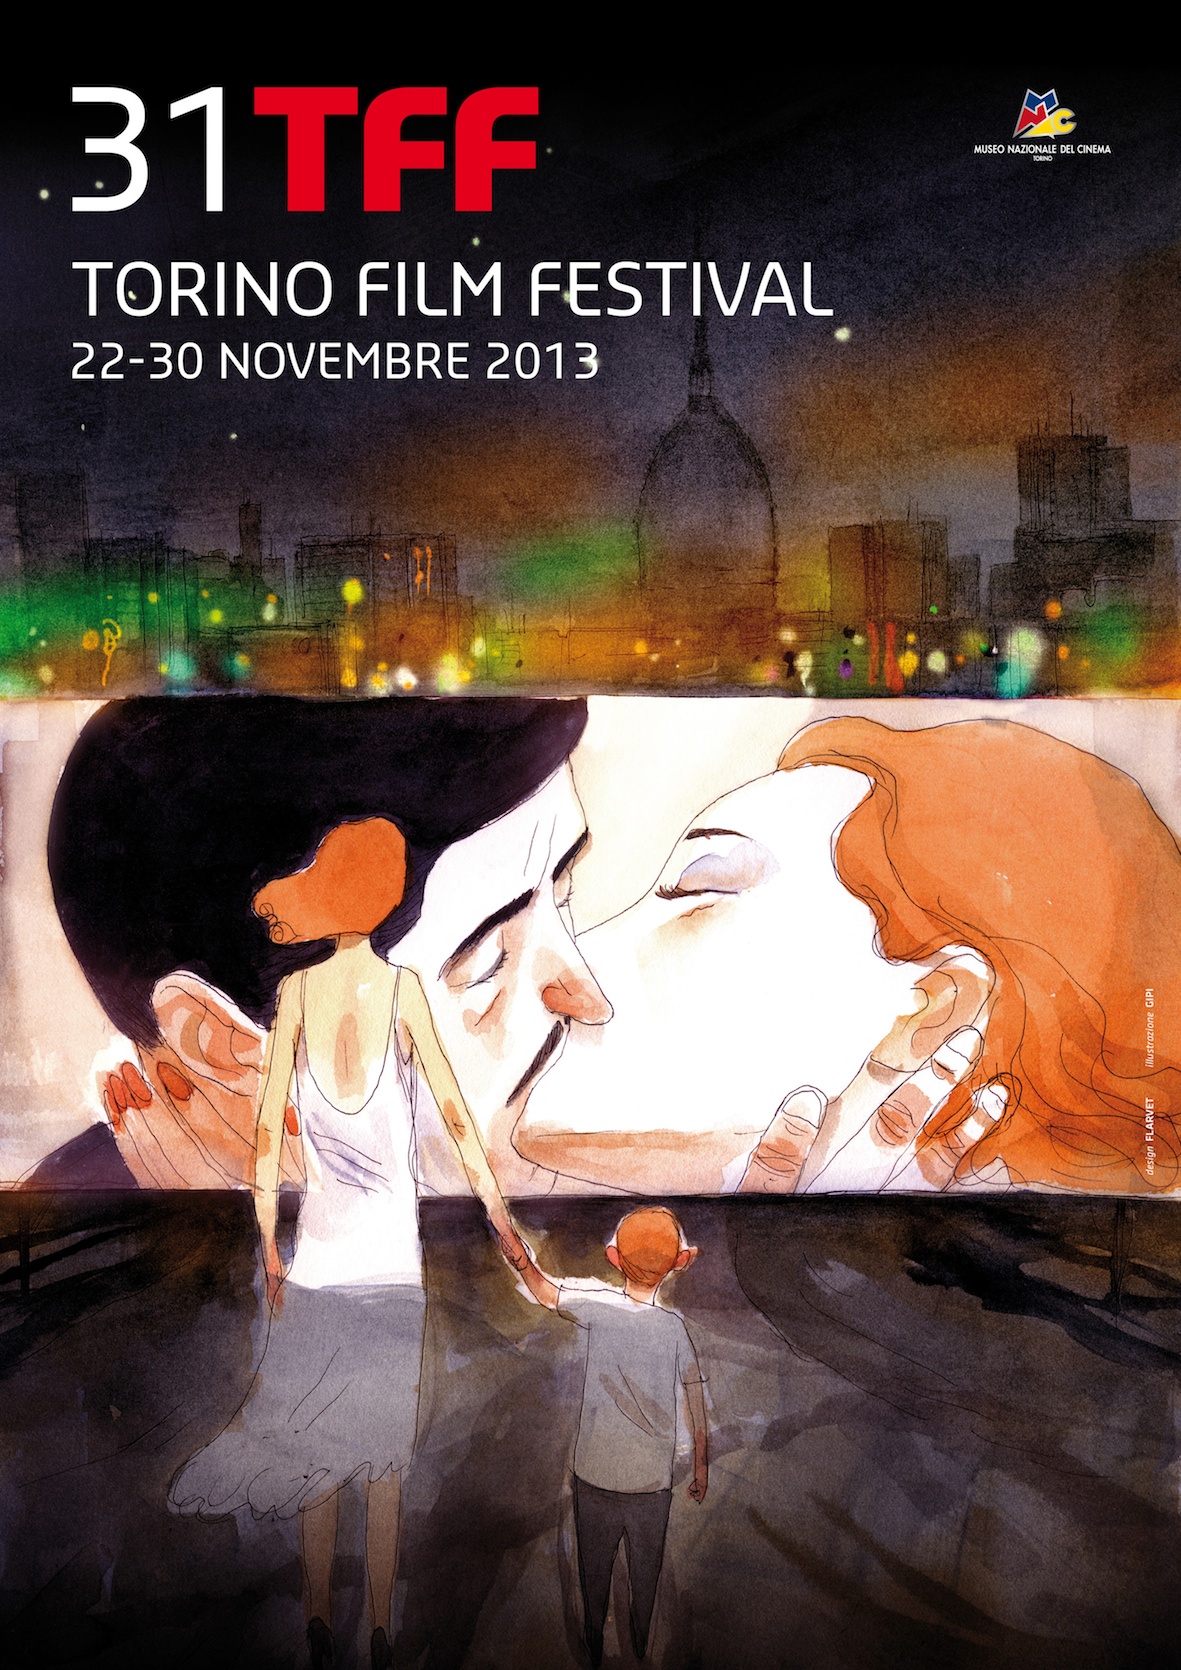 -tff-torino-film-festival-2013-